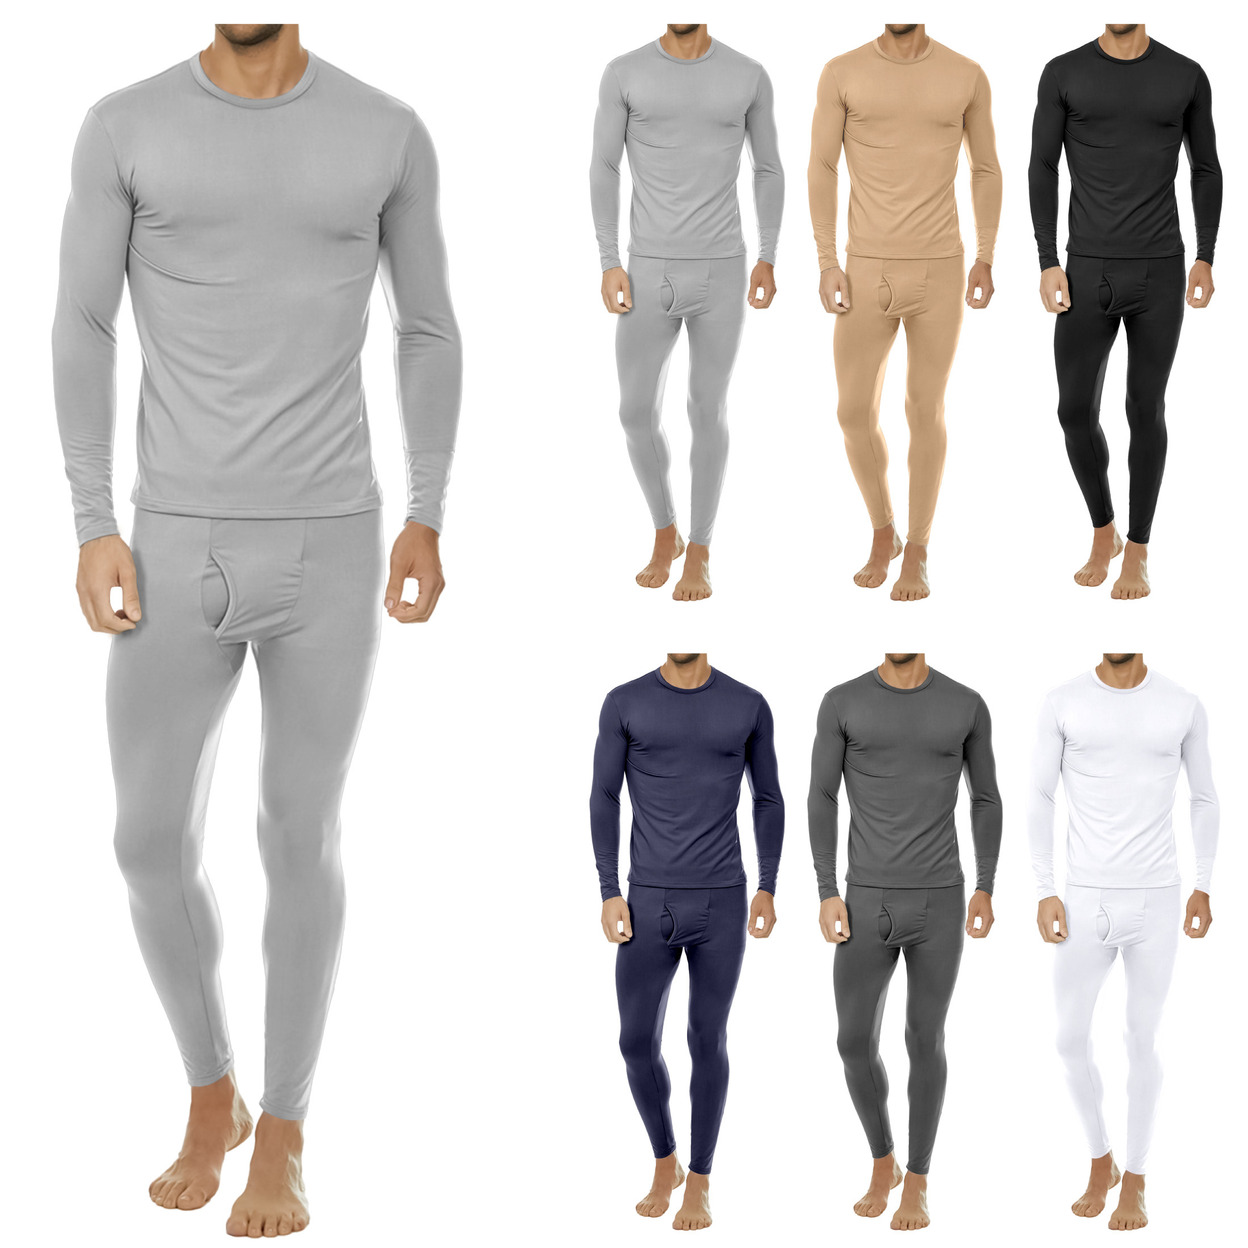 2-Sets: Men's Winter Warm Fleece Lined Thermal Underwear Set For Cold Weather - Navy&navy, Medium